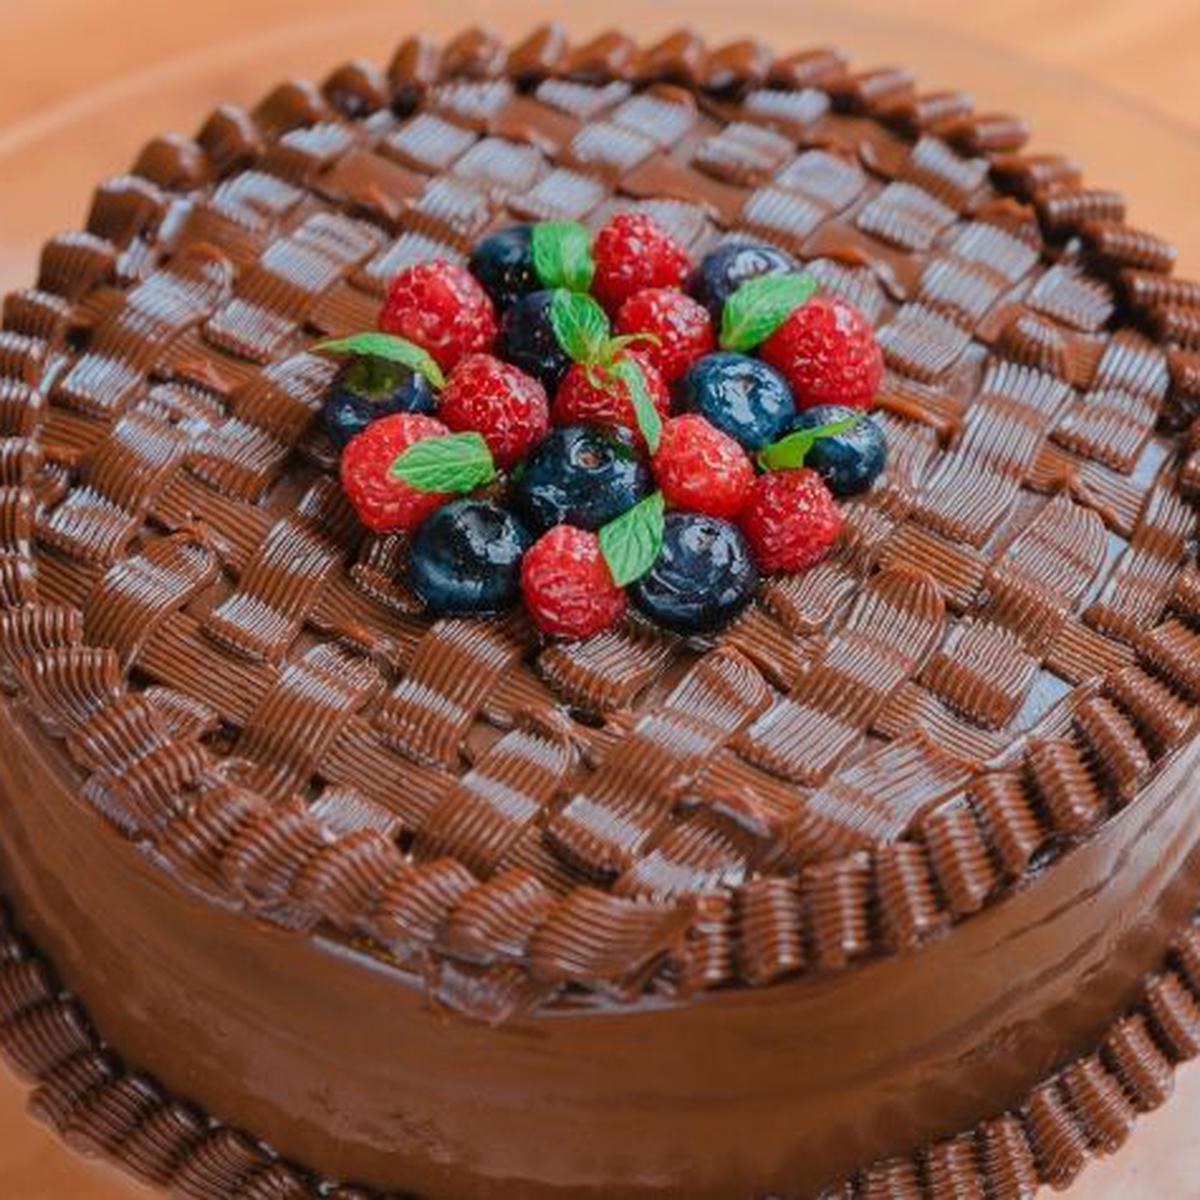 Aprende a preparar esta riquísima torta de chocolate | Receta | VIDA |  PERU21